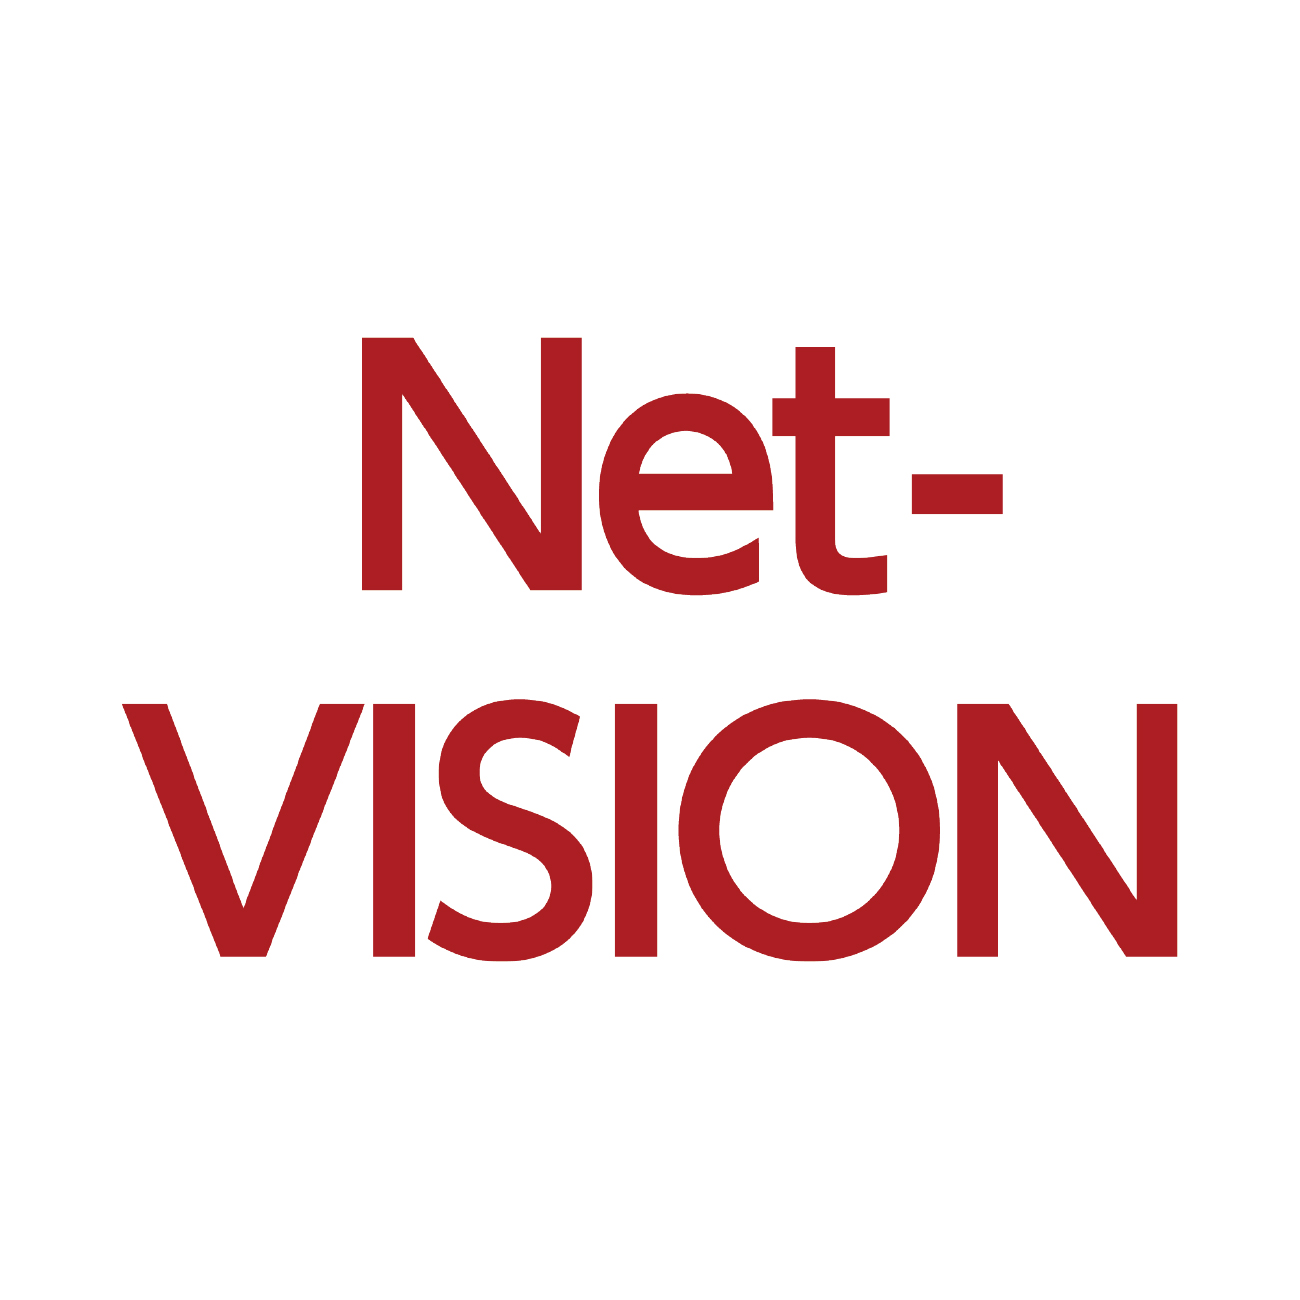 NET.VISION